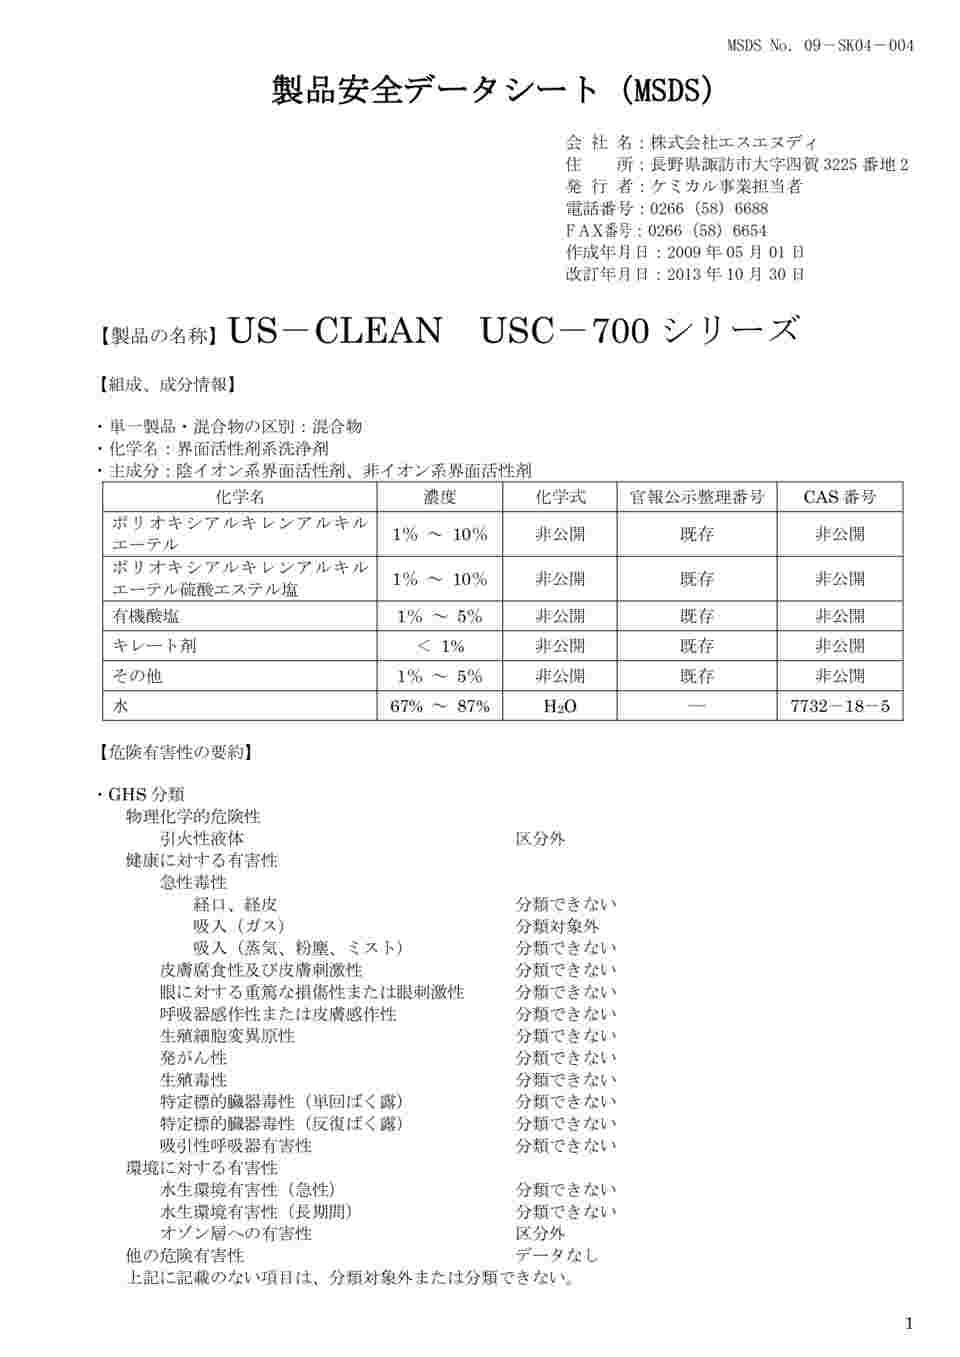 61-0084-89 US-CLEAN 水系脱脂用洗浄剤 スタンダードモデル 水溶性加工油脱脂用 USC-700シリーズ （ポリ容器タイプ） USC-704